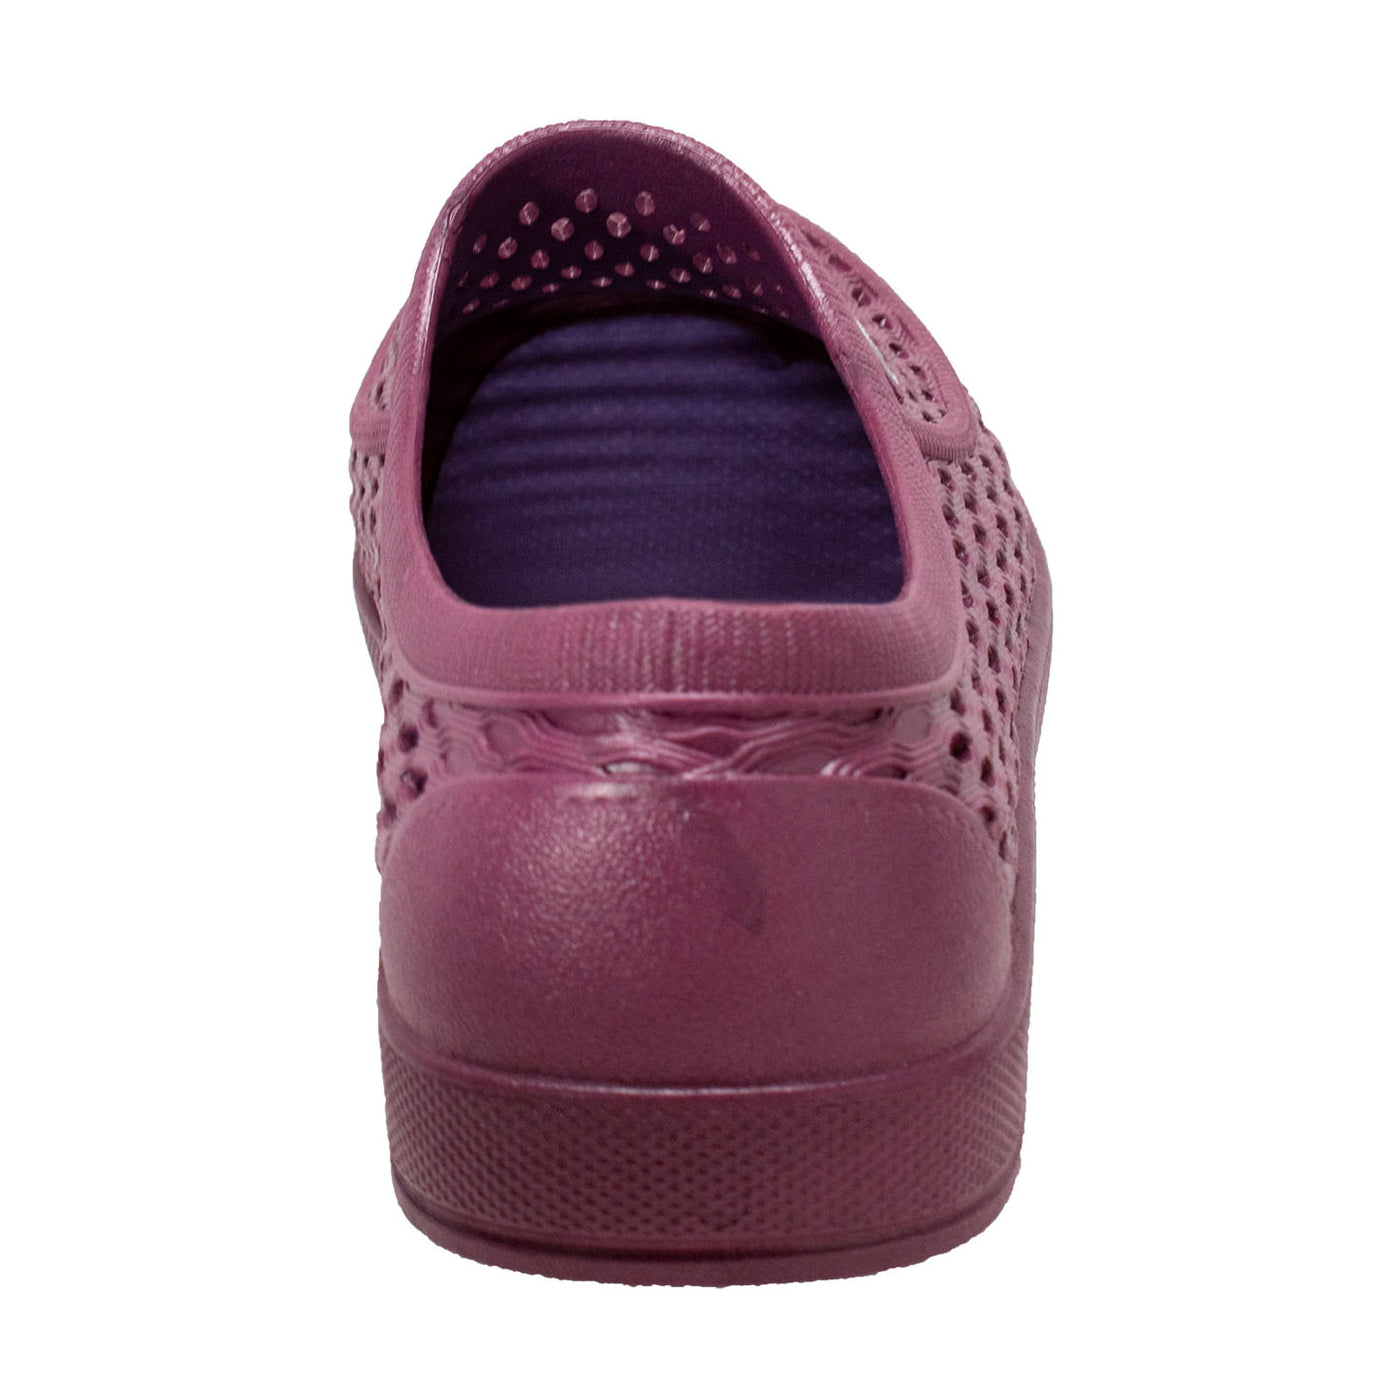 Women's 4" Relax Aqua Tecs Garden Shoes - 8909 - Shop Genuine Leather men & women's boots online | AdTecFootWear